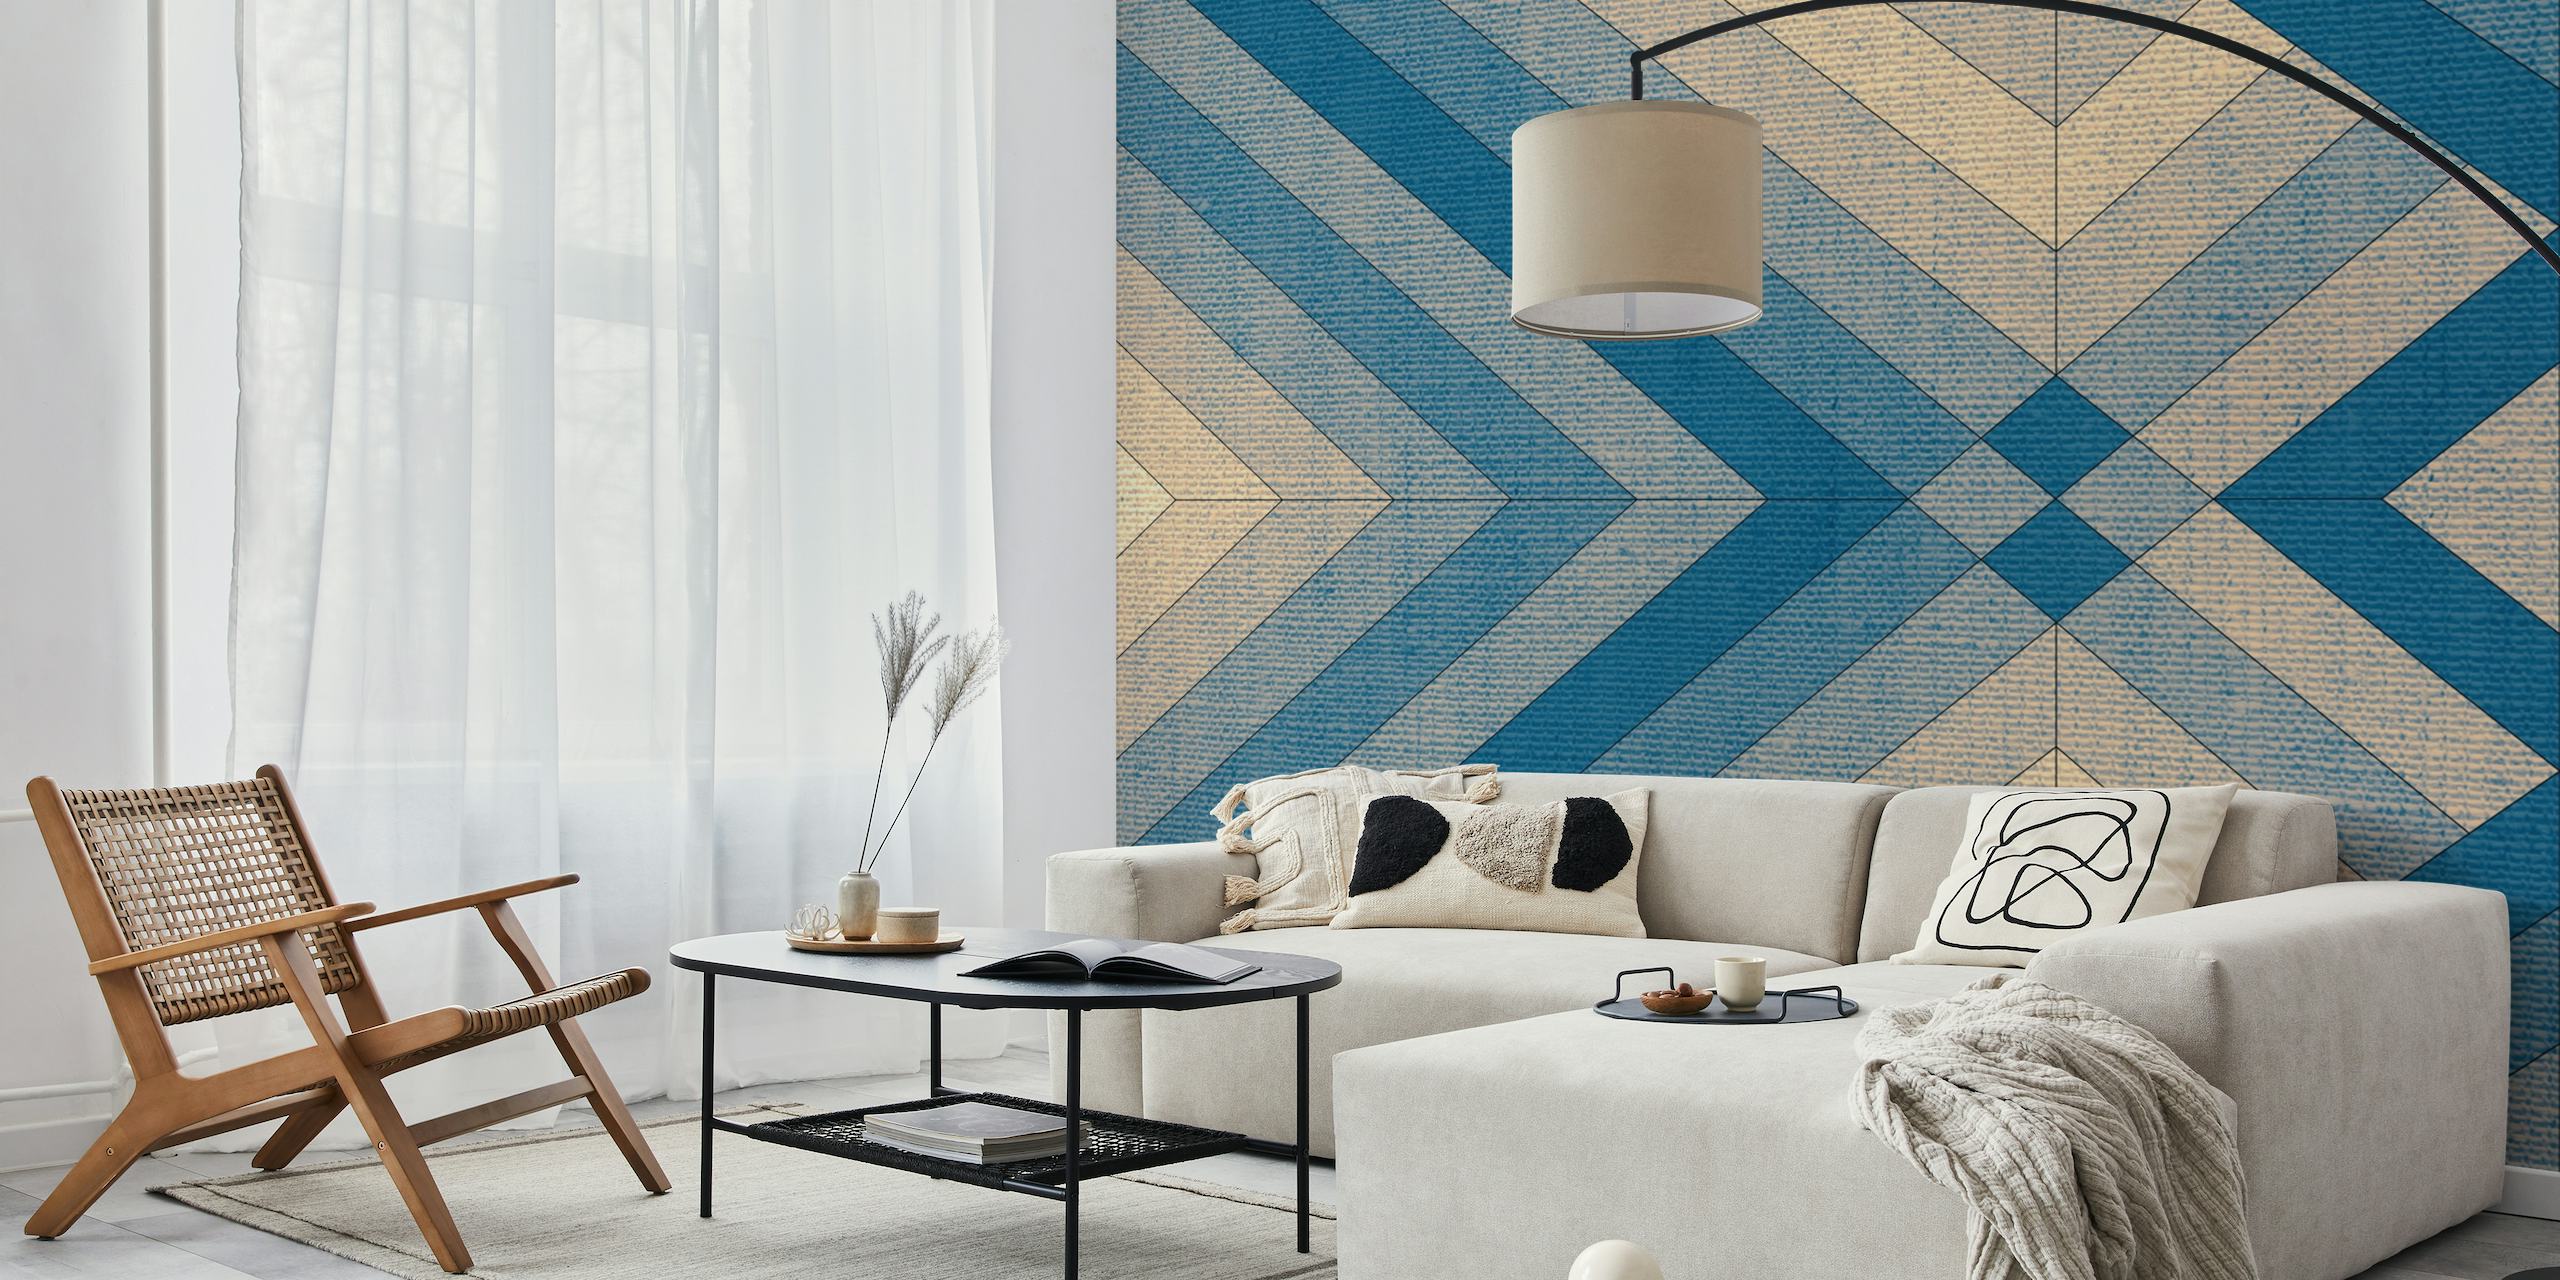 Geometric design on textile wallpaper